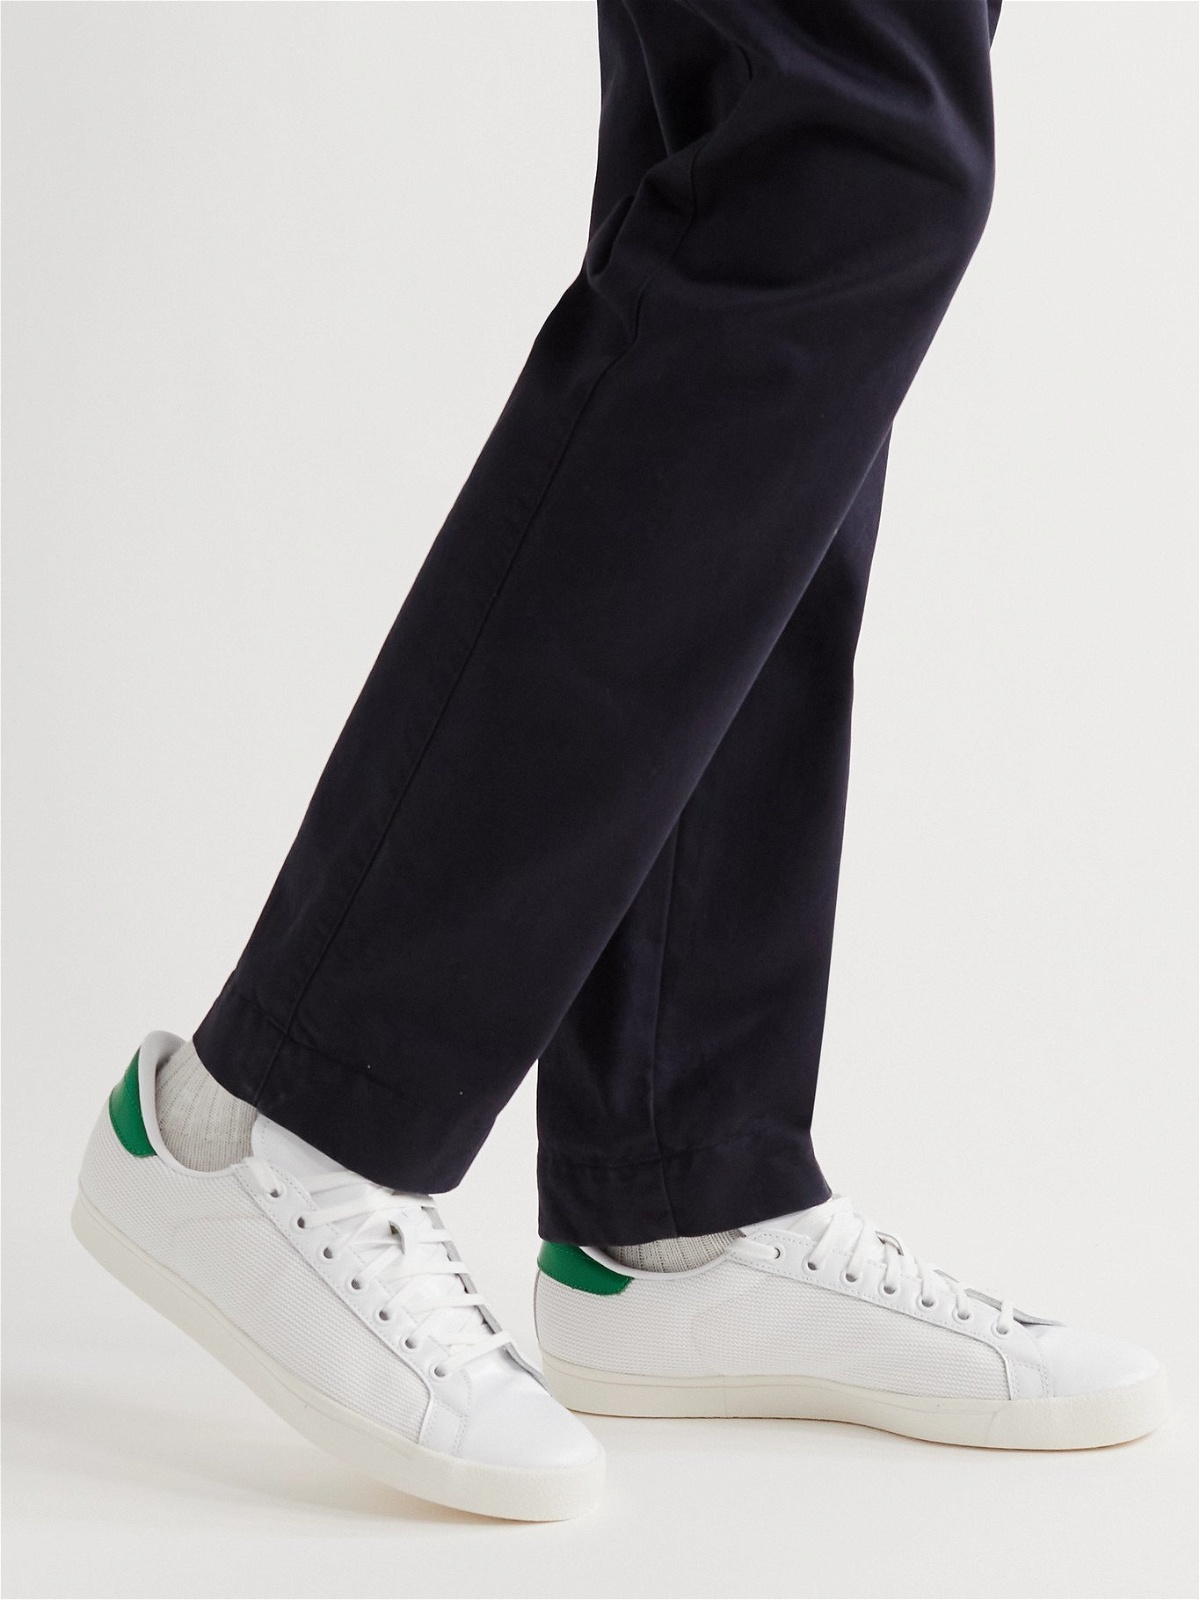 elevation sammenholdt sovende ADIDAS ORIGINALS - Rod Laver Mesh and Leather Sneakers - White adidas  Originals